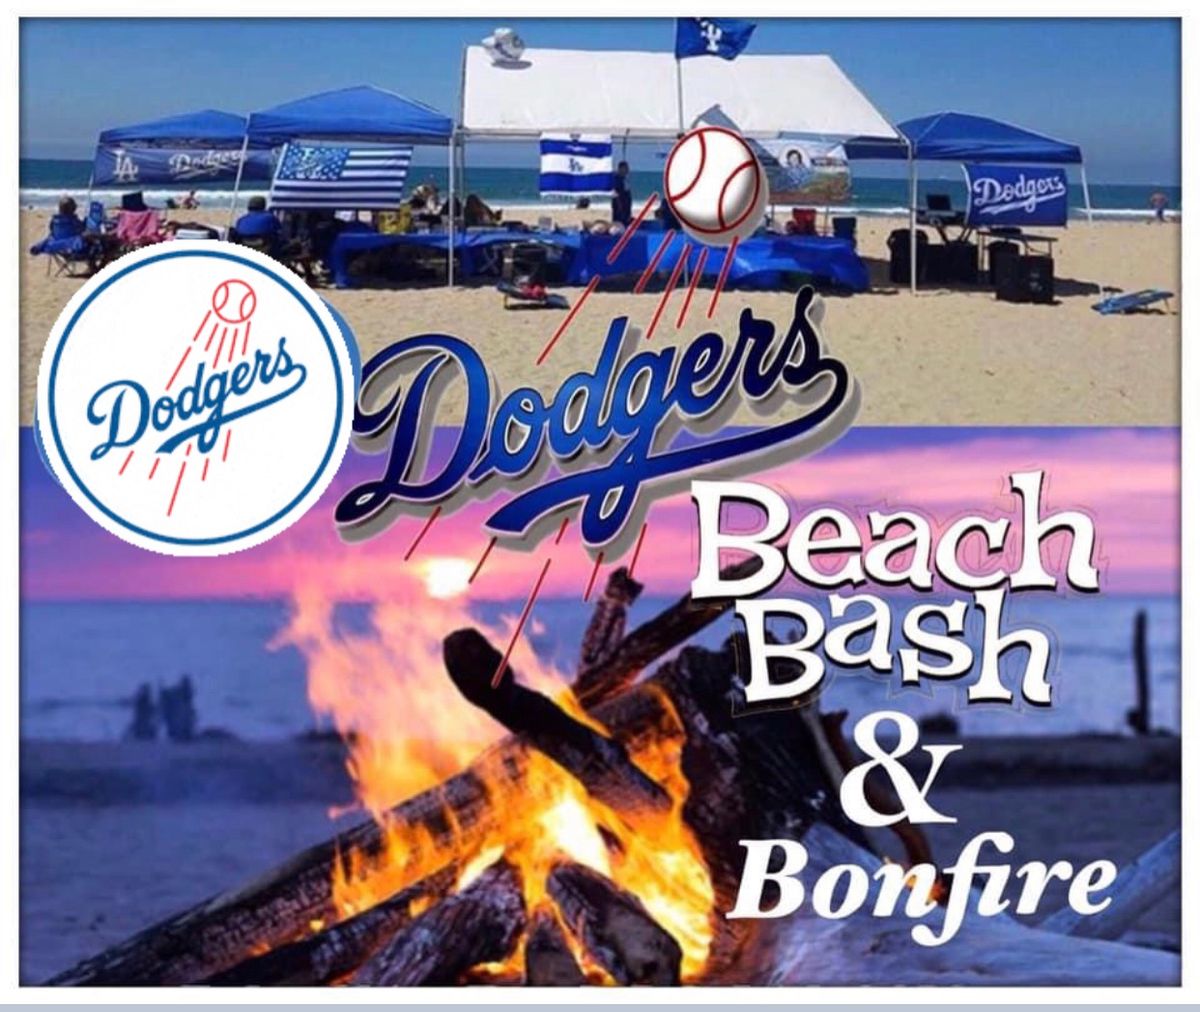 8th Annual Klownski Dodgers Beach Bash